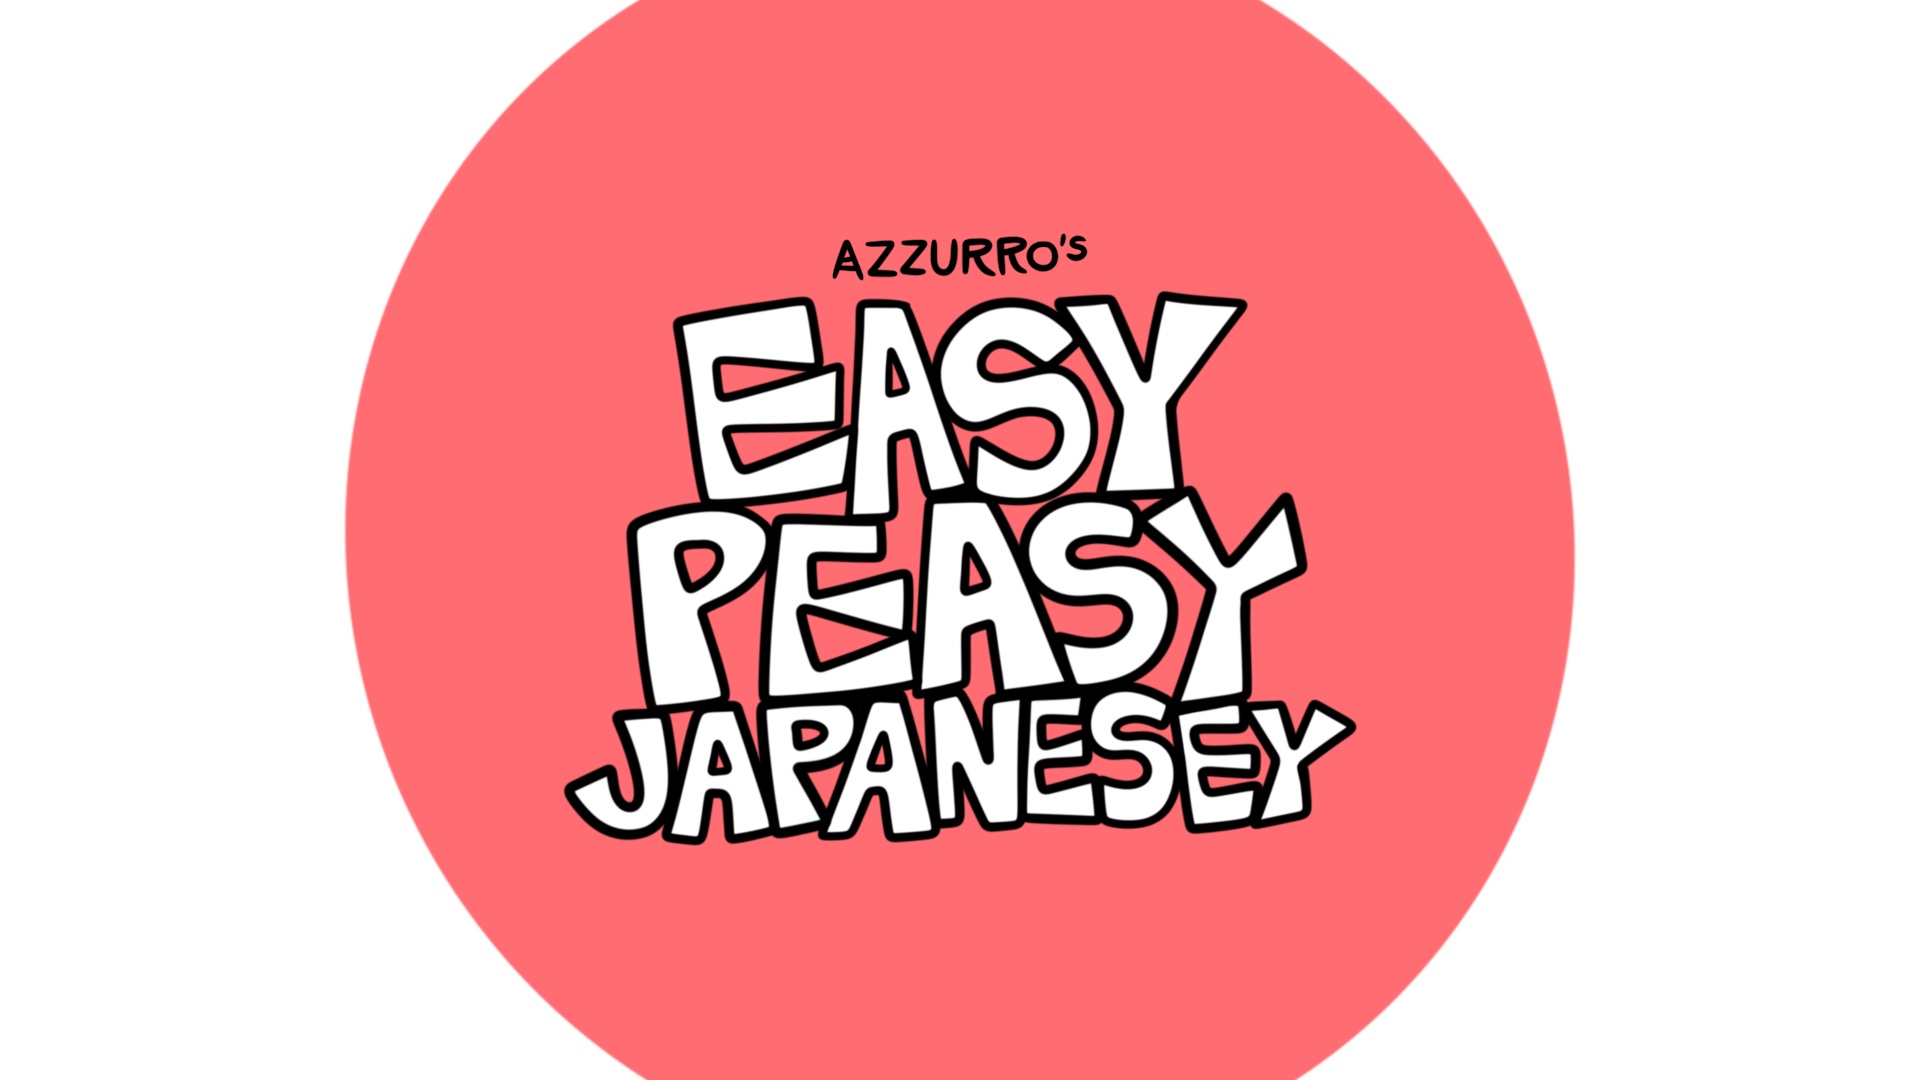 Easy Peasy Japanesey